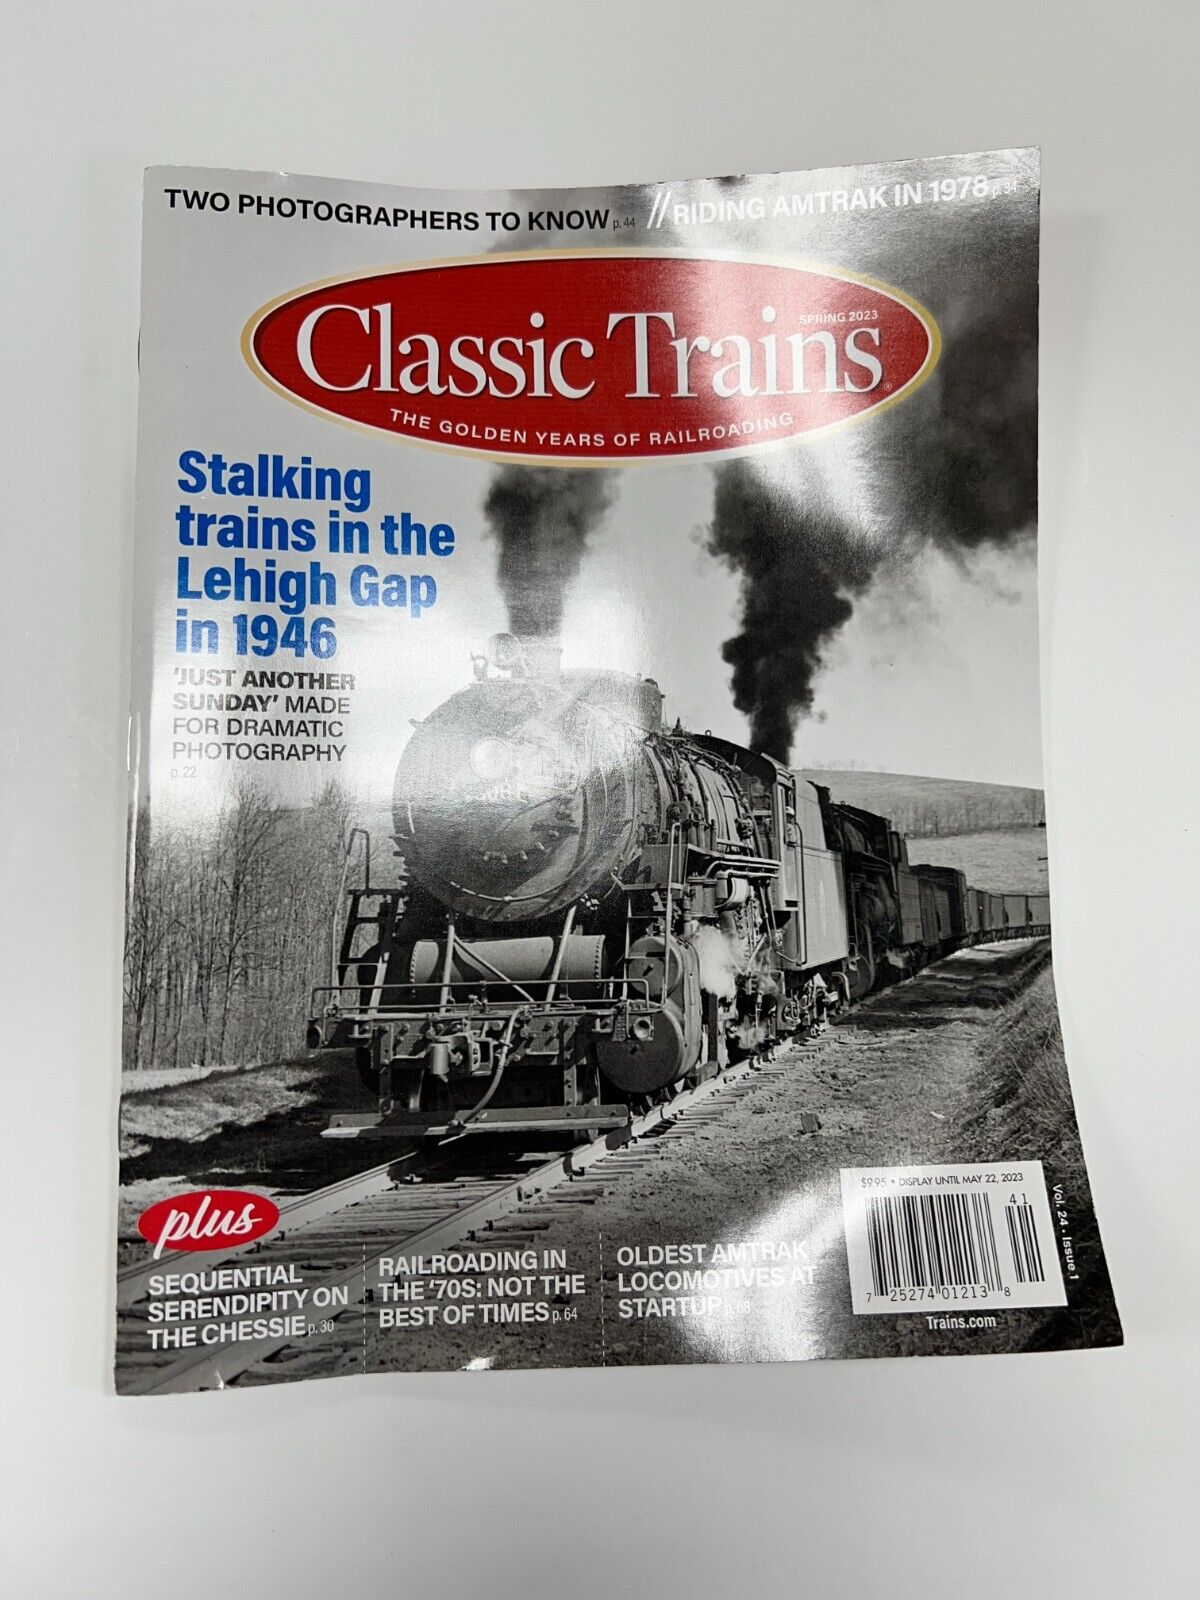 Classic Trains Magazine Volume 24 Issue 1 Stalking trains in the Lehigh gap